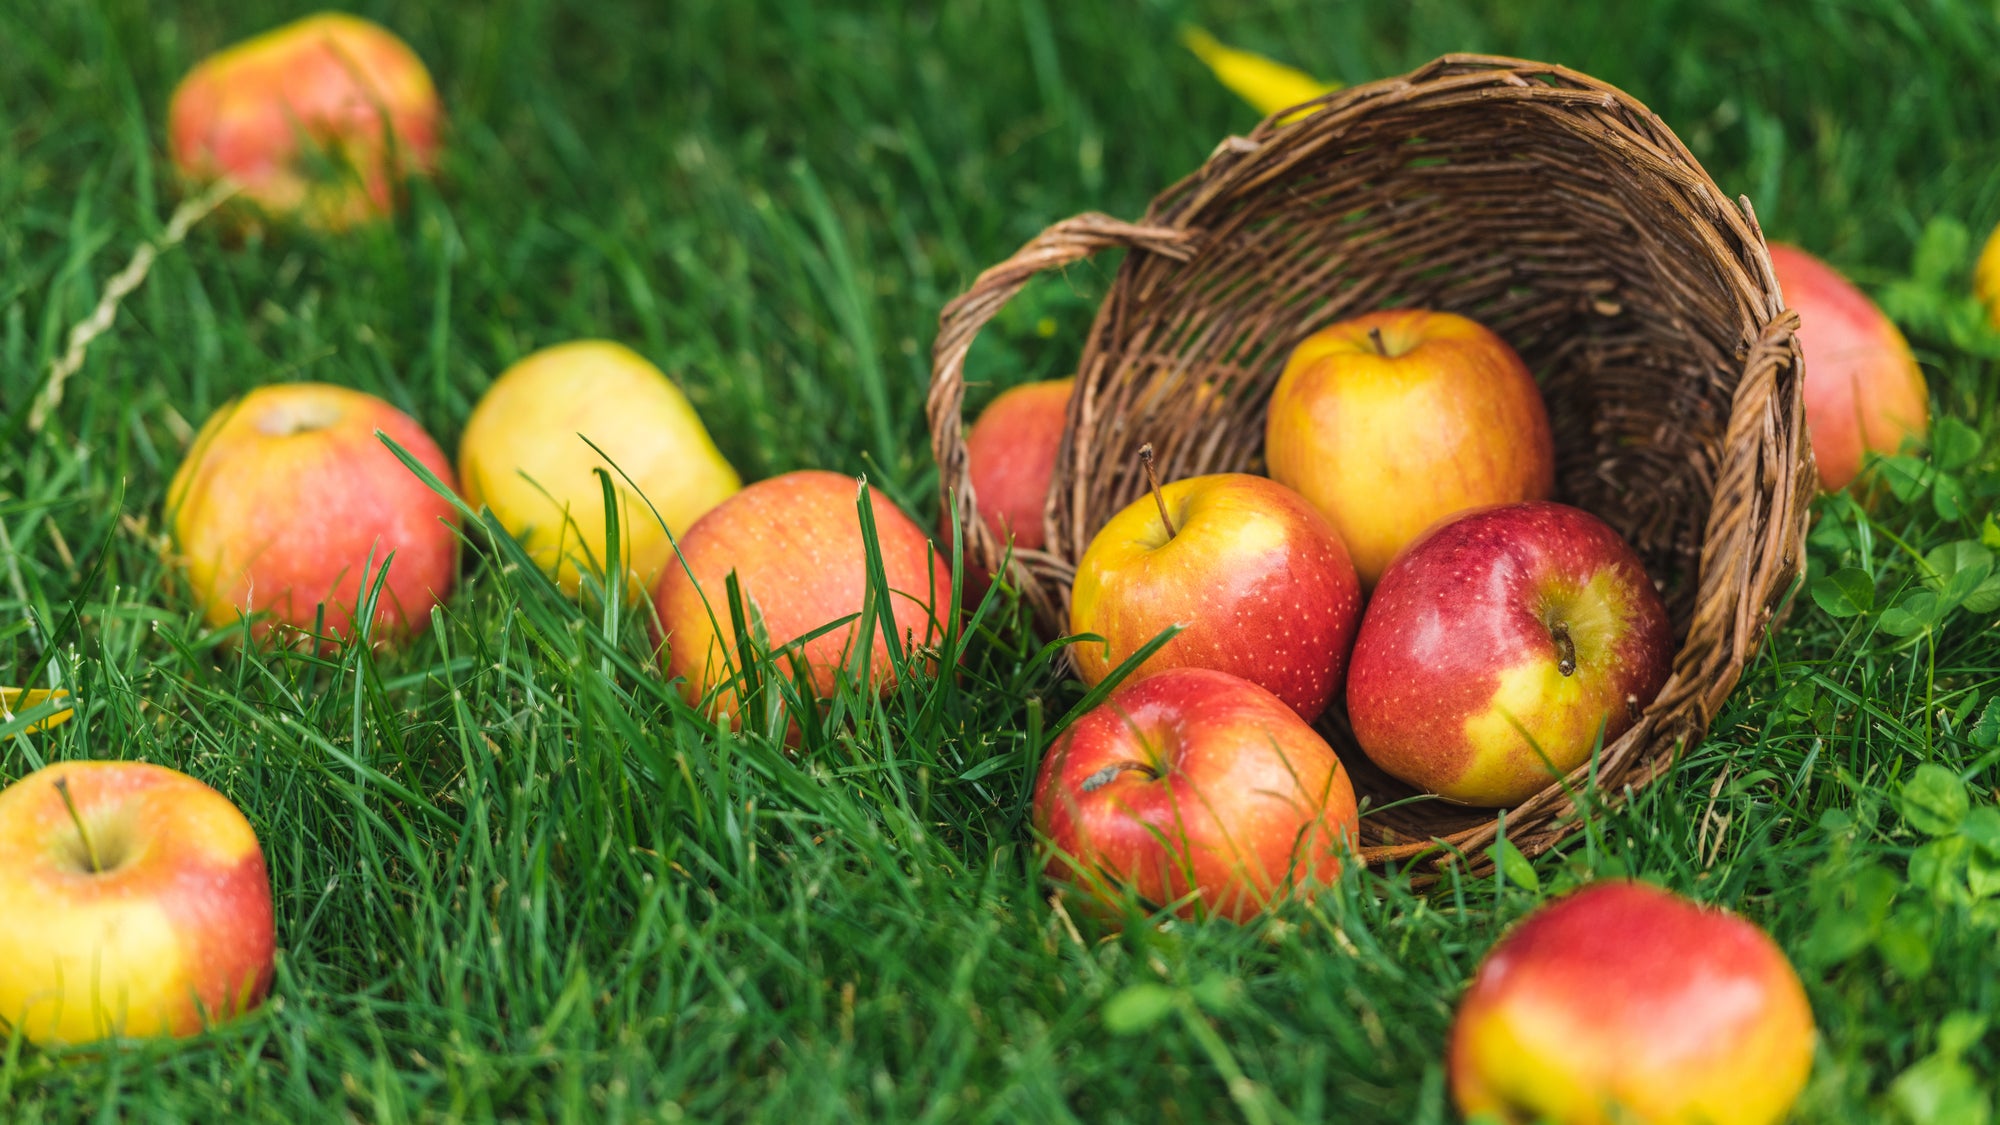 Apple seeks trademark of 'actual apple', Swiss fruit association says